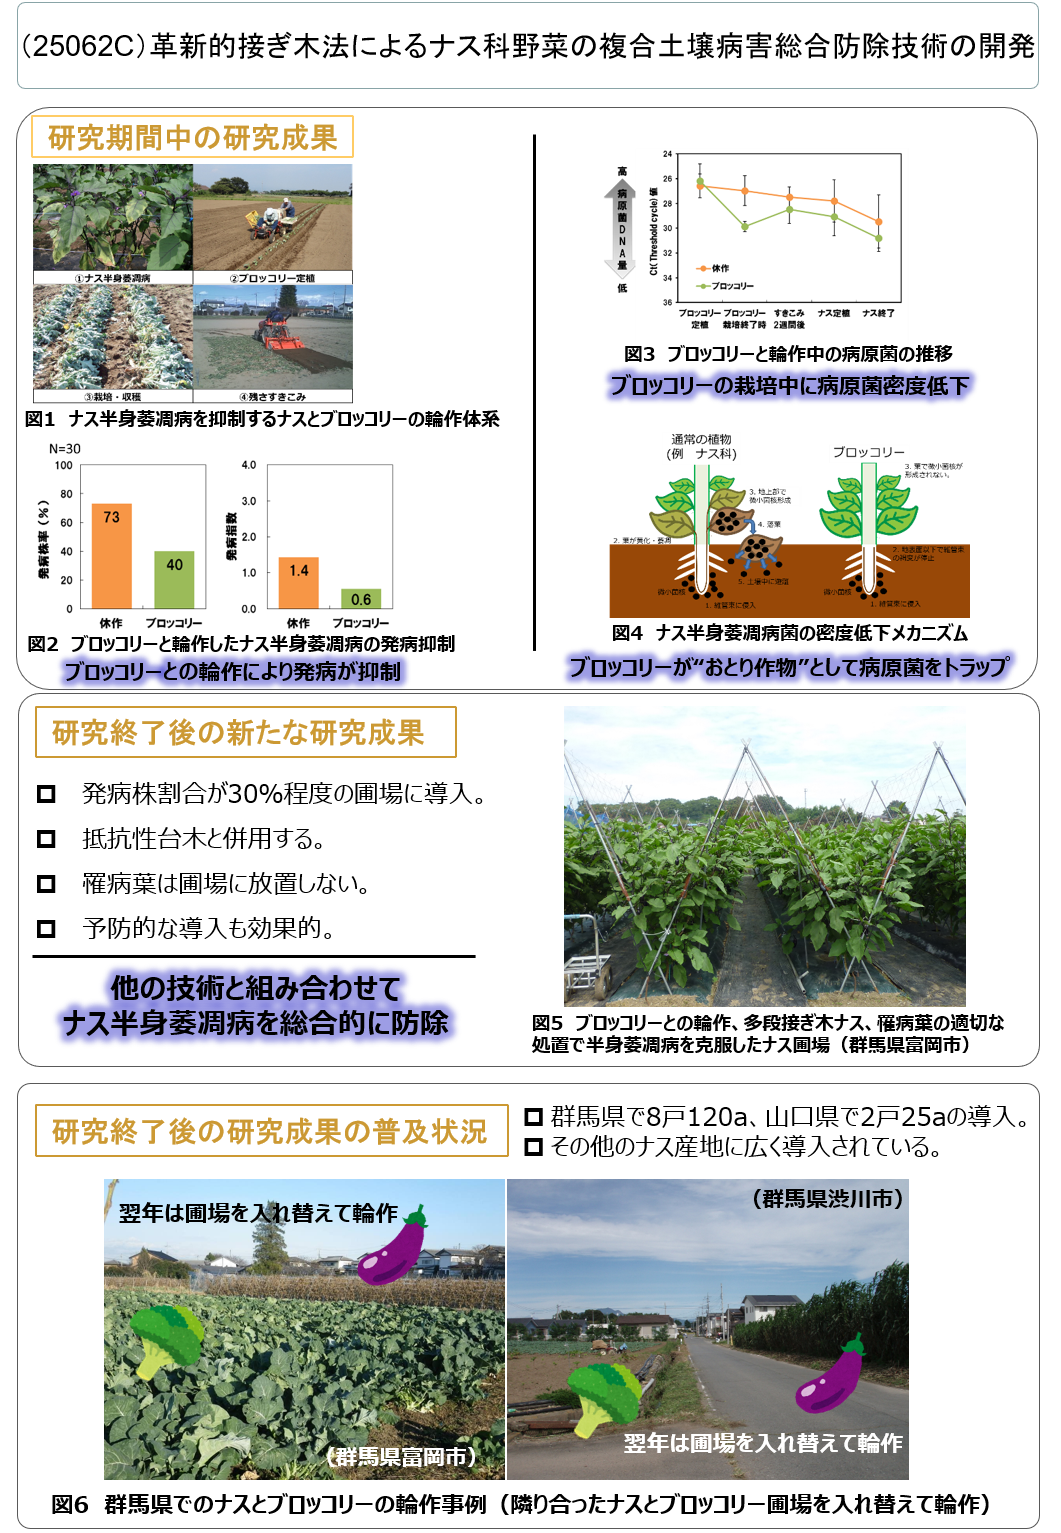 (25062C) 革新的接ぎ木法によるナス科野菜の複合土壌病害総合防除技術の開発